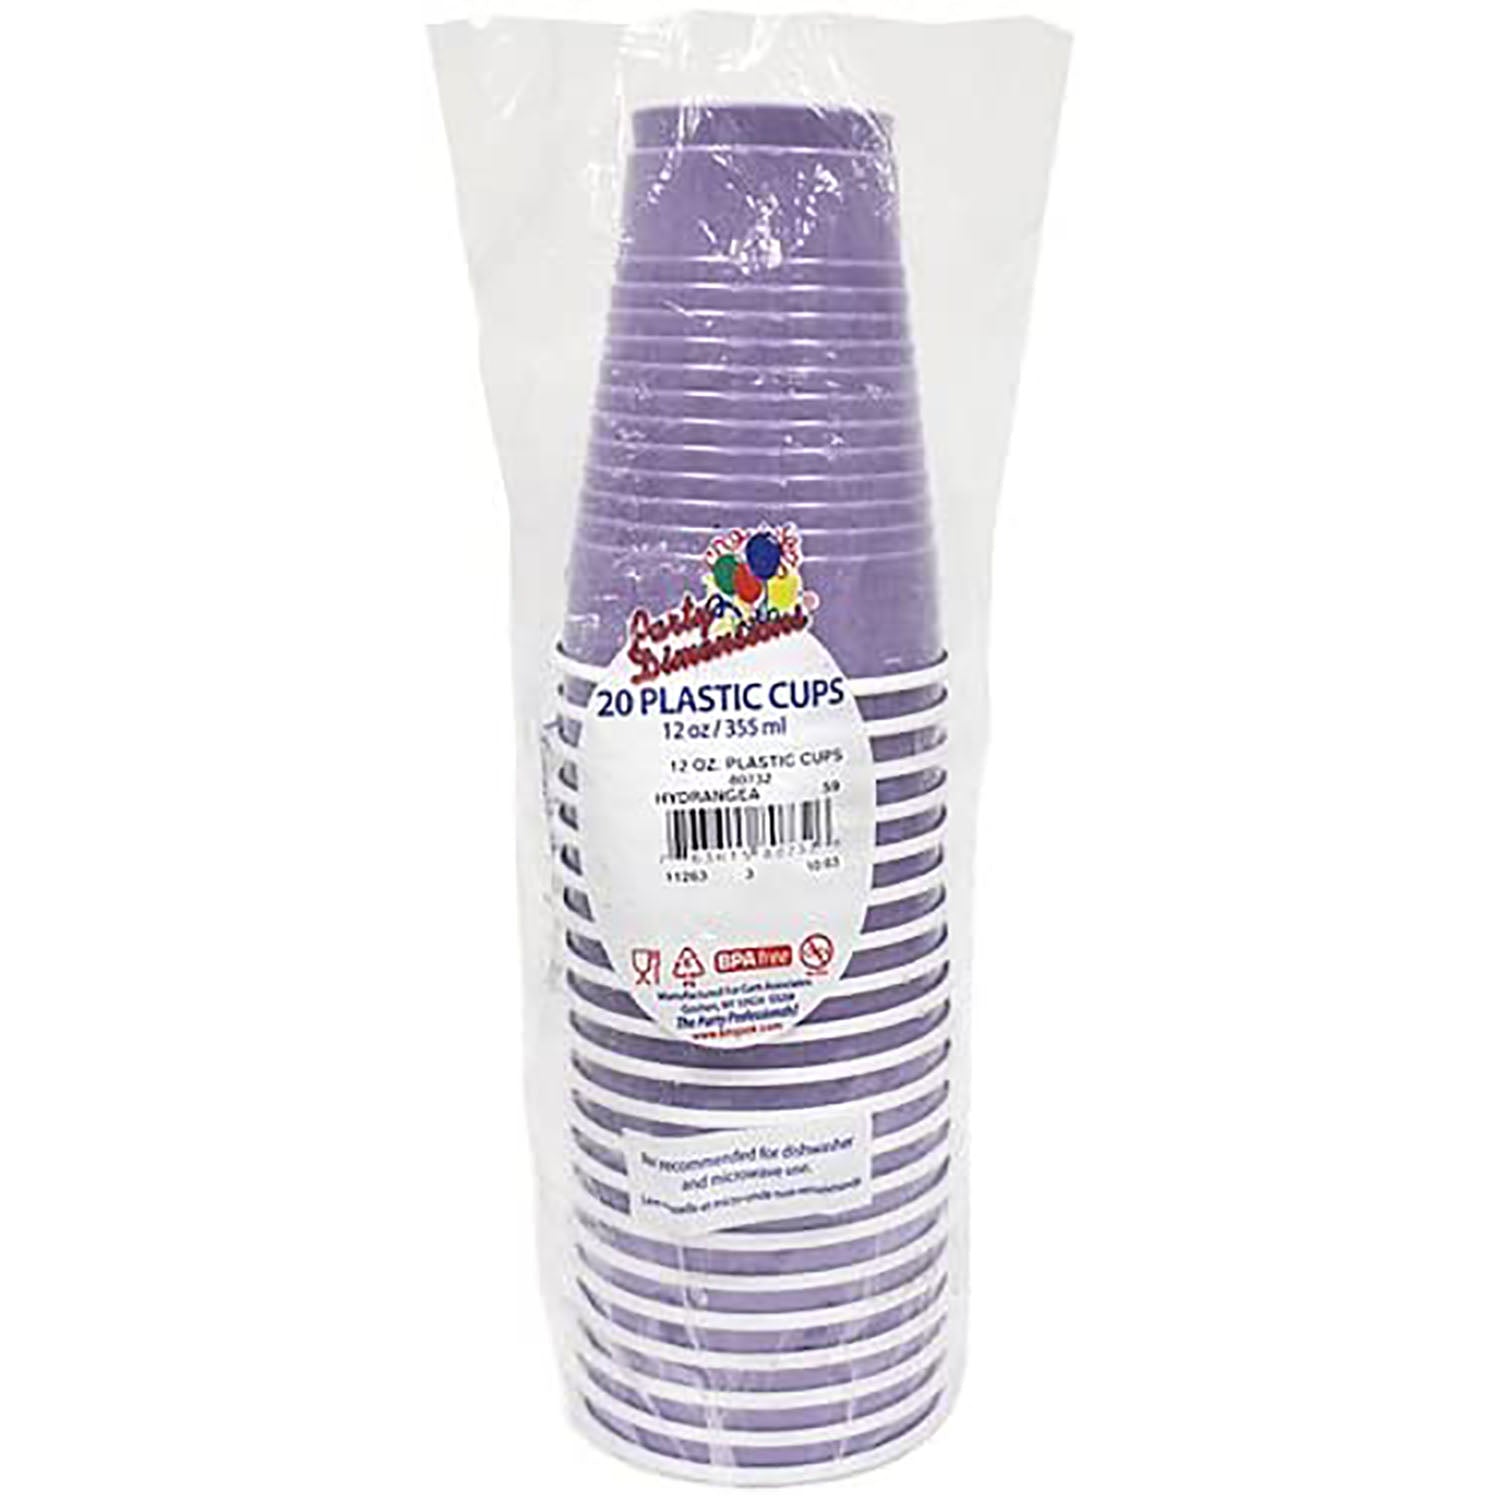 Exquisite 12 Ounce Disposable Purple Plastic Cups-50 Count